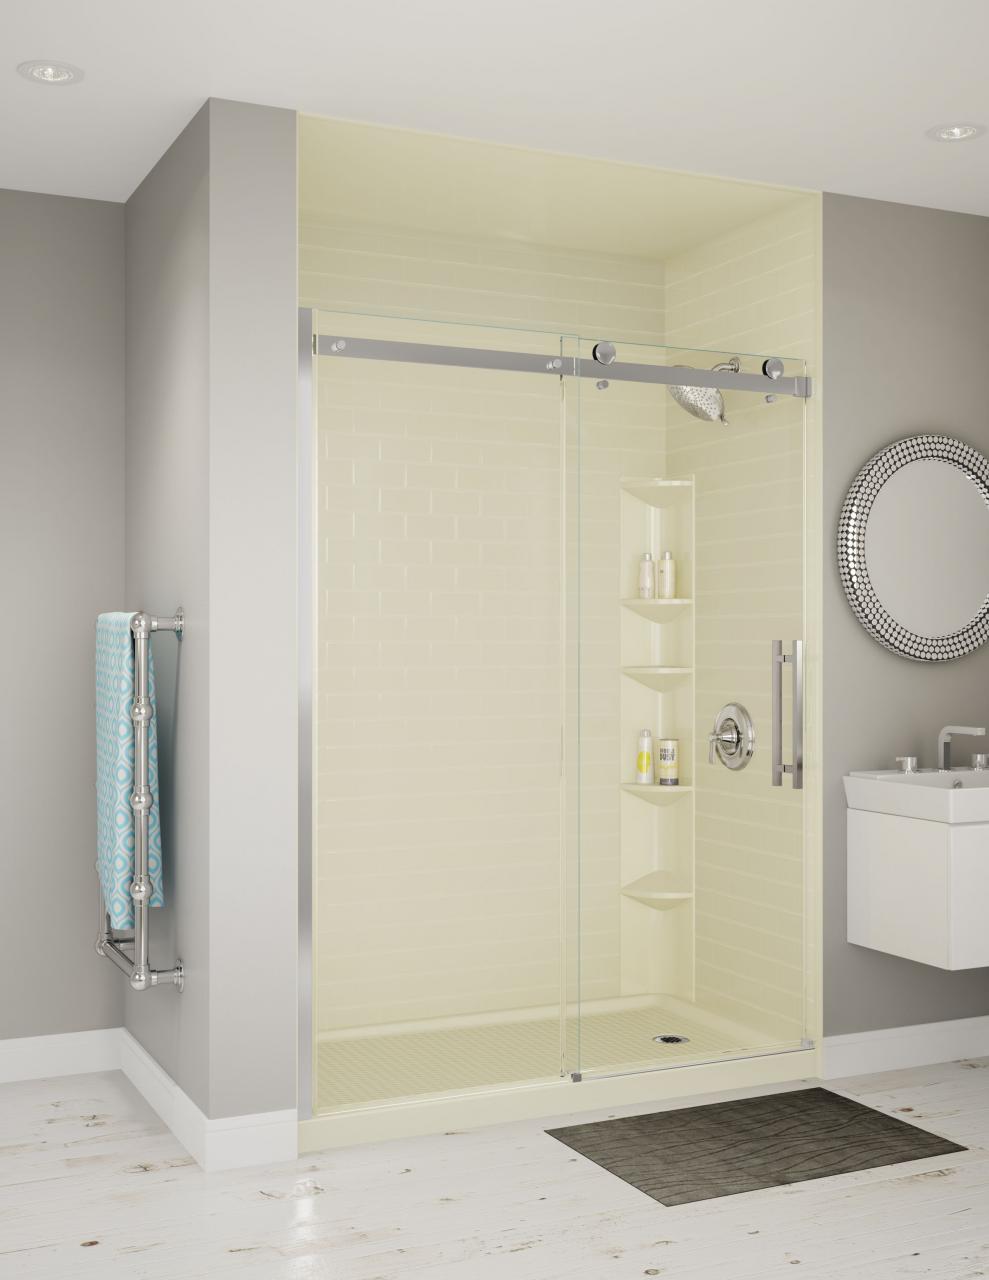 Savona Shower in 2020 Bathroom renovation shower, Bathtub remodel